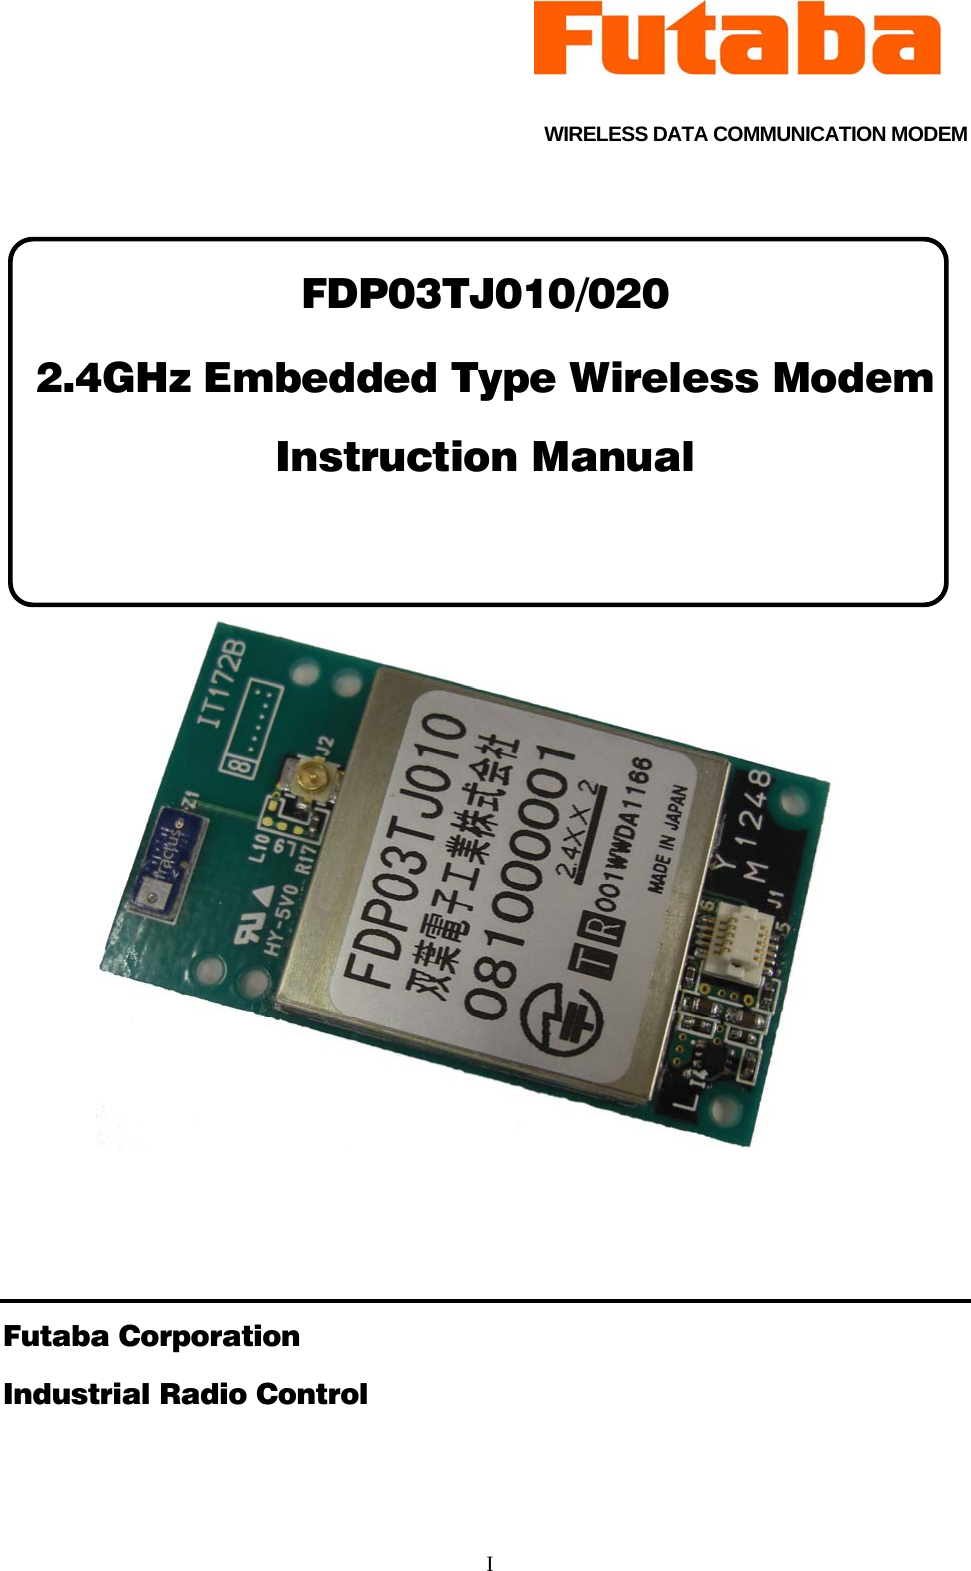     I  WIRELESS DATA COMMUNICATION MODEM  FDP03TJ010/020 2.4GHz Embedded Type Wireless Modem Instruction Manual              Futaba Corporation Industrial Radio Control